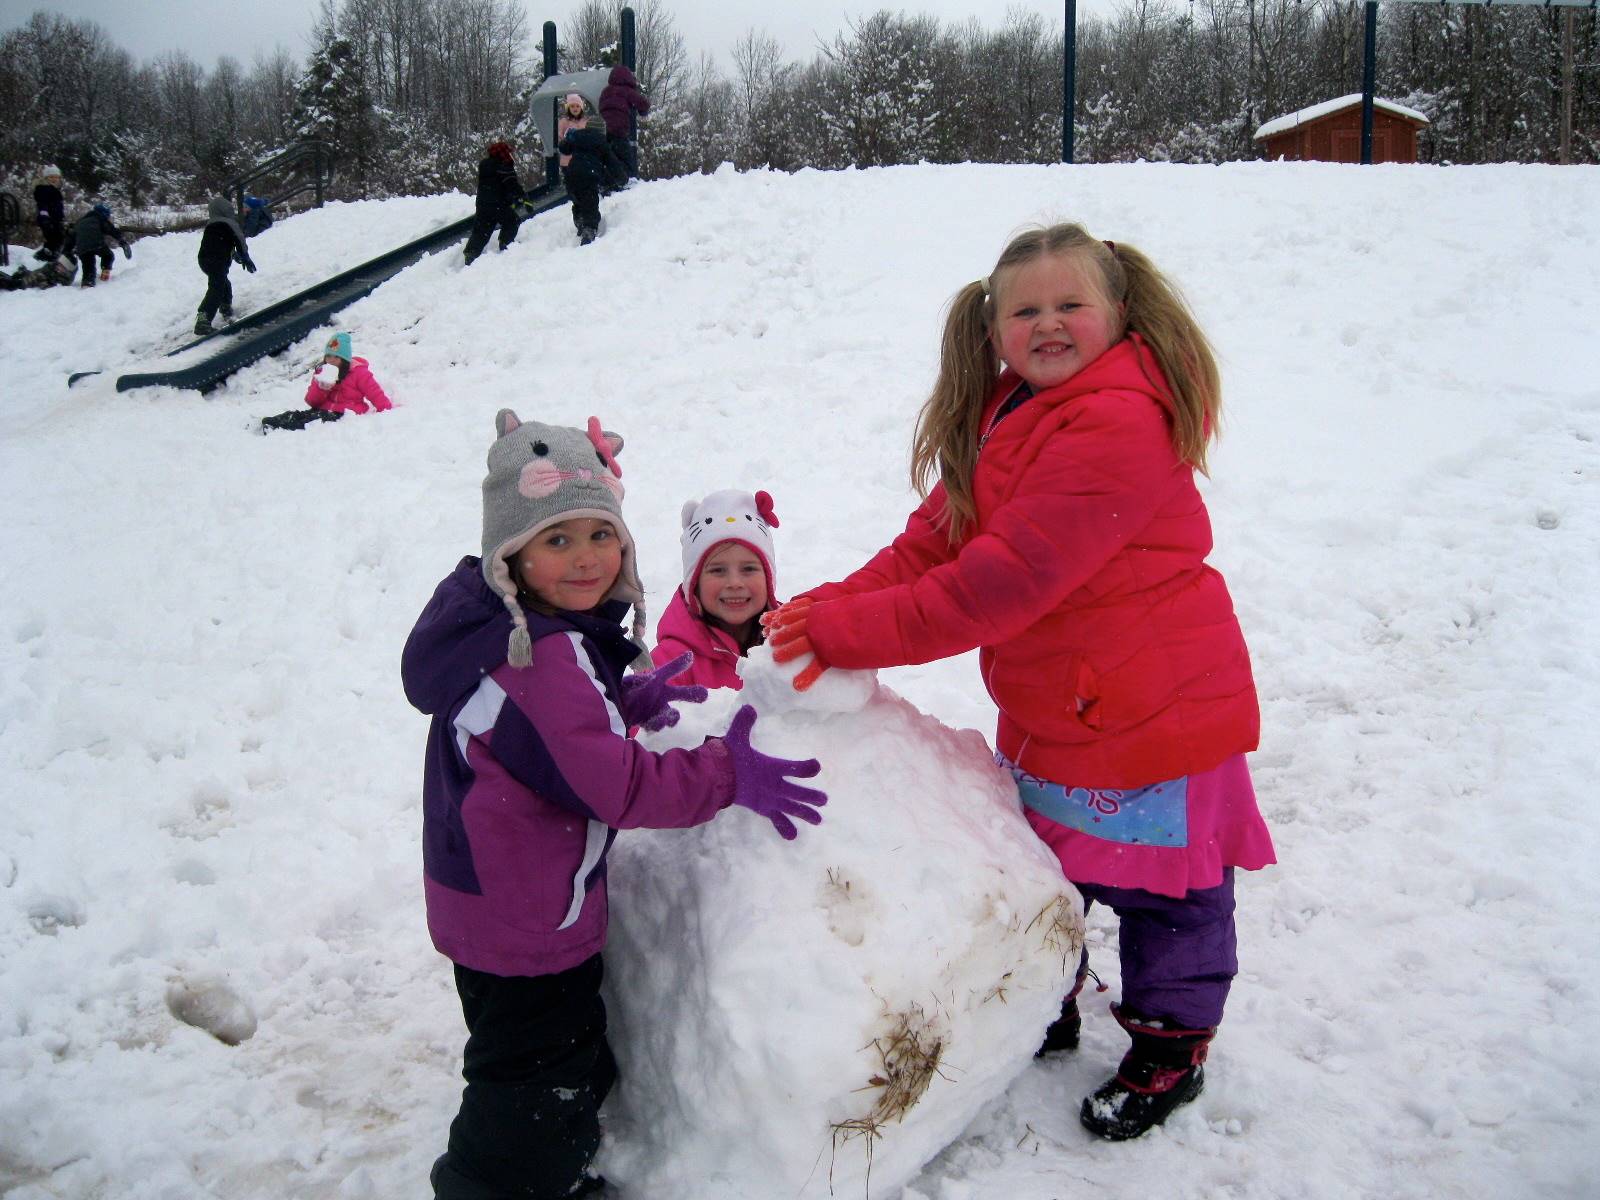 3 children building a snowman.